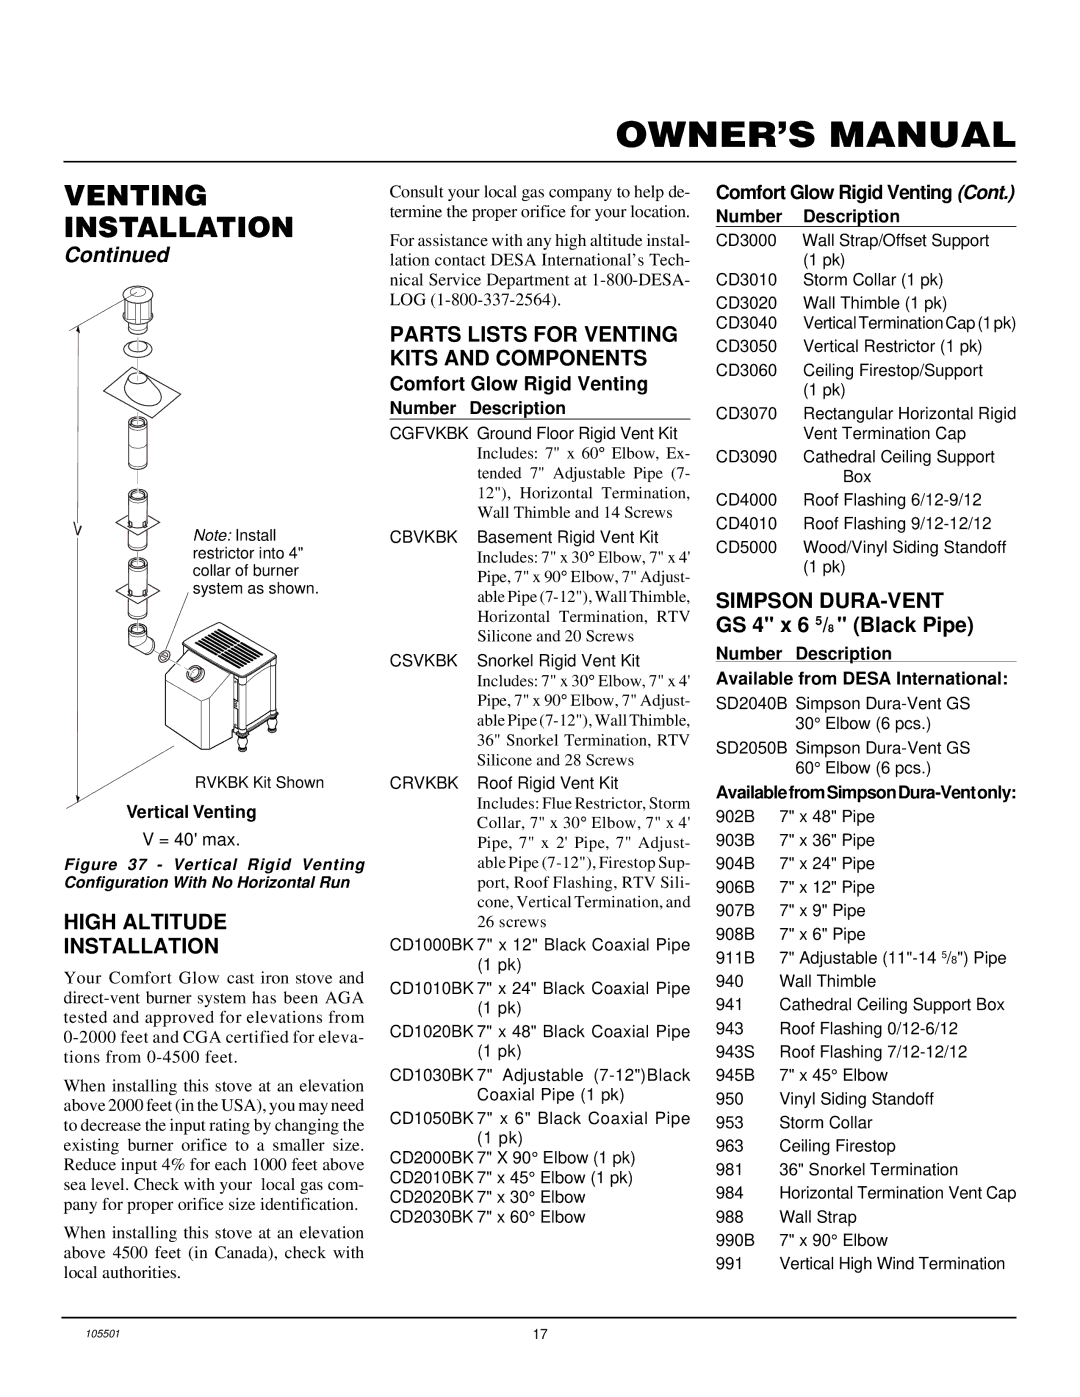 Desa CDVBN(A), CDVBP(A) High Altitude Installation, Parts Lists for Venting Kits and Components, Rvkbk Kit Shown 